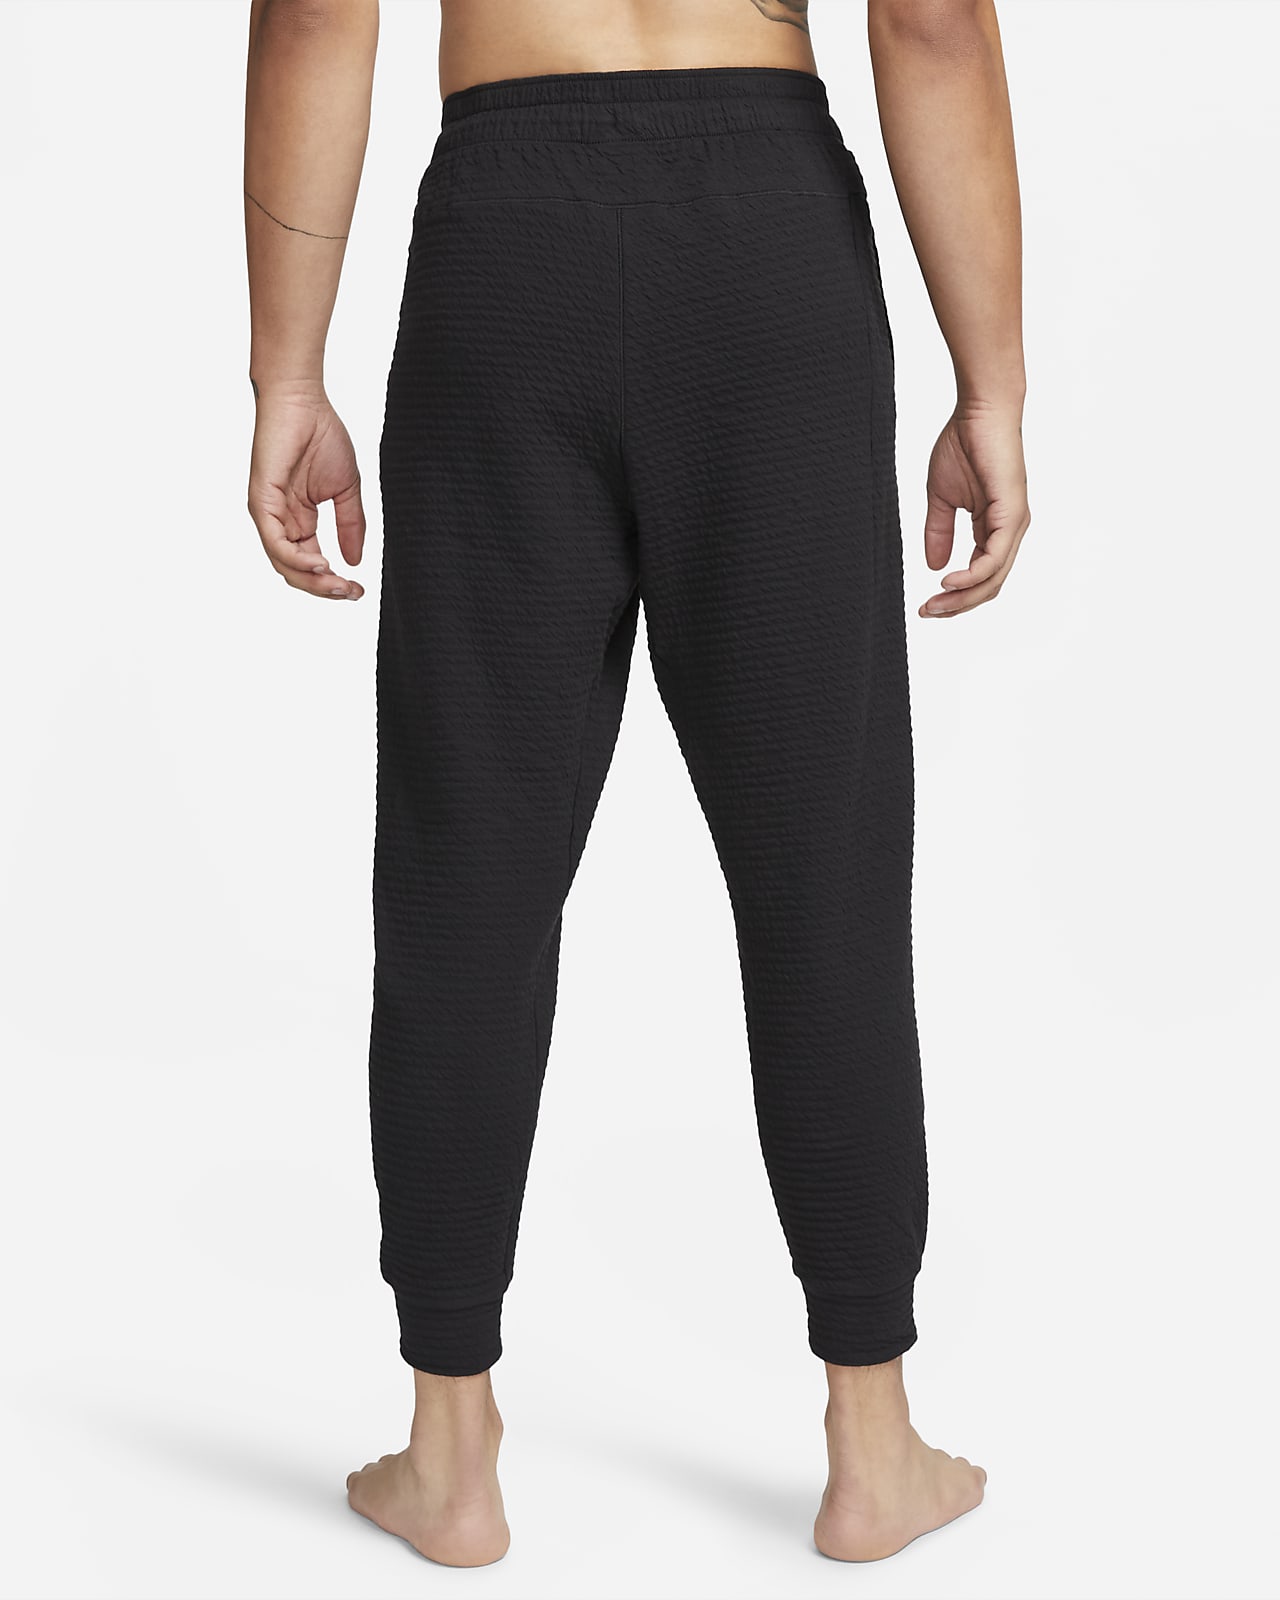 Nike, Yoga Pants Mens, Preto/Cinzento